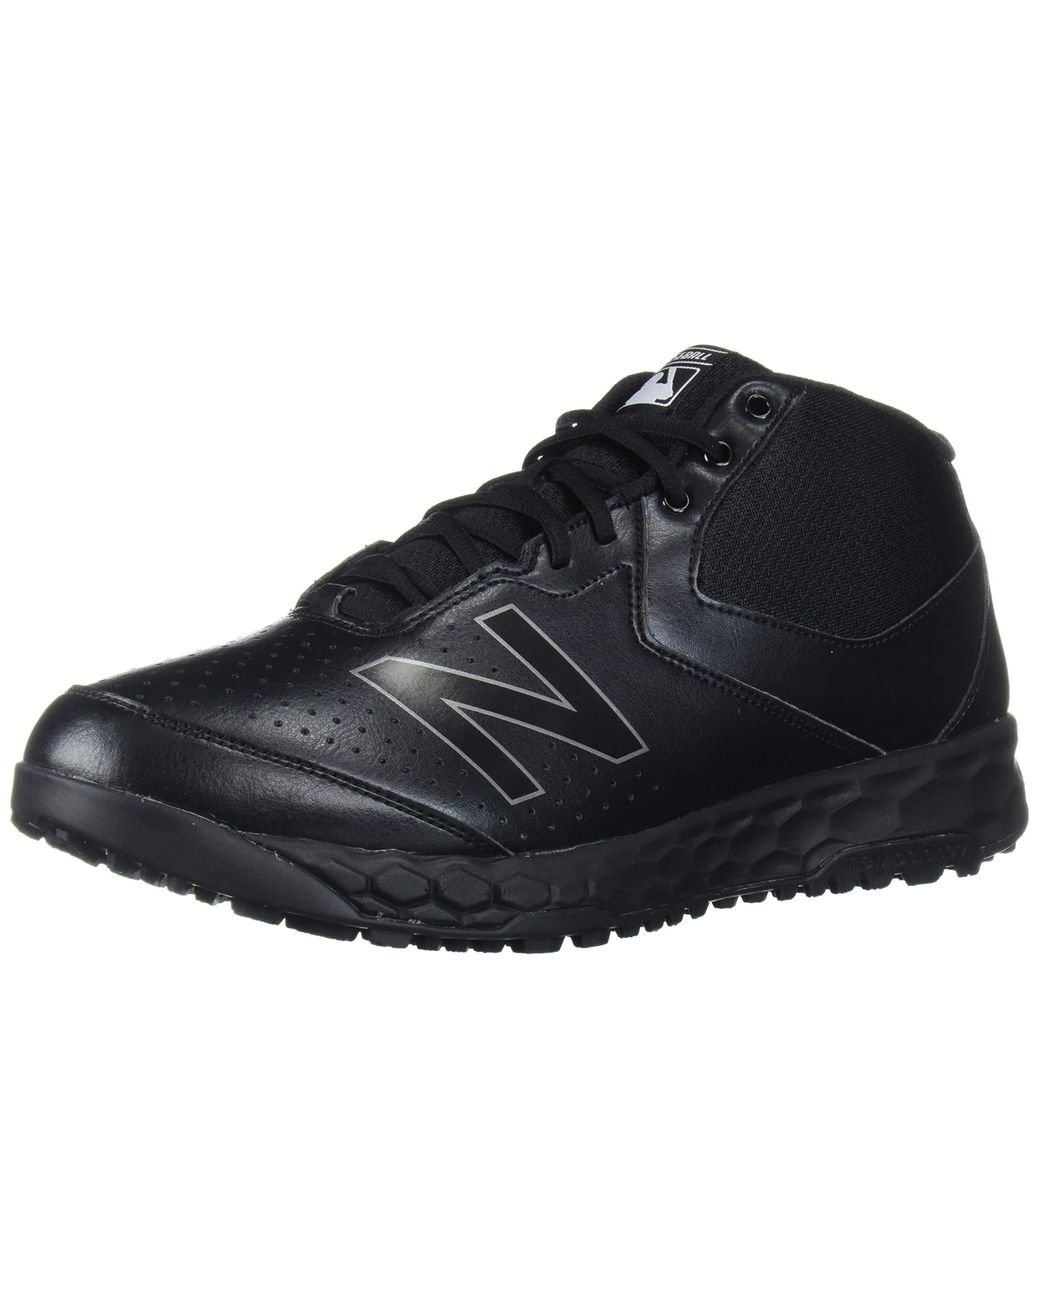 New Balance Fresh Foam 950 V3 Umpire Mid-cut Baseball Shoe in Black/Black  (Black) for Men - Save 13% | Lyst